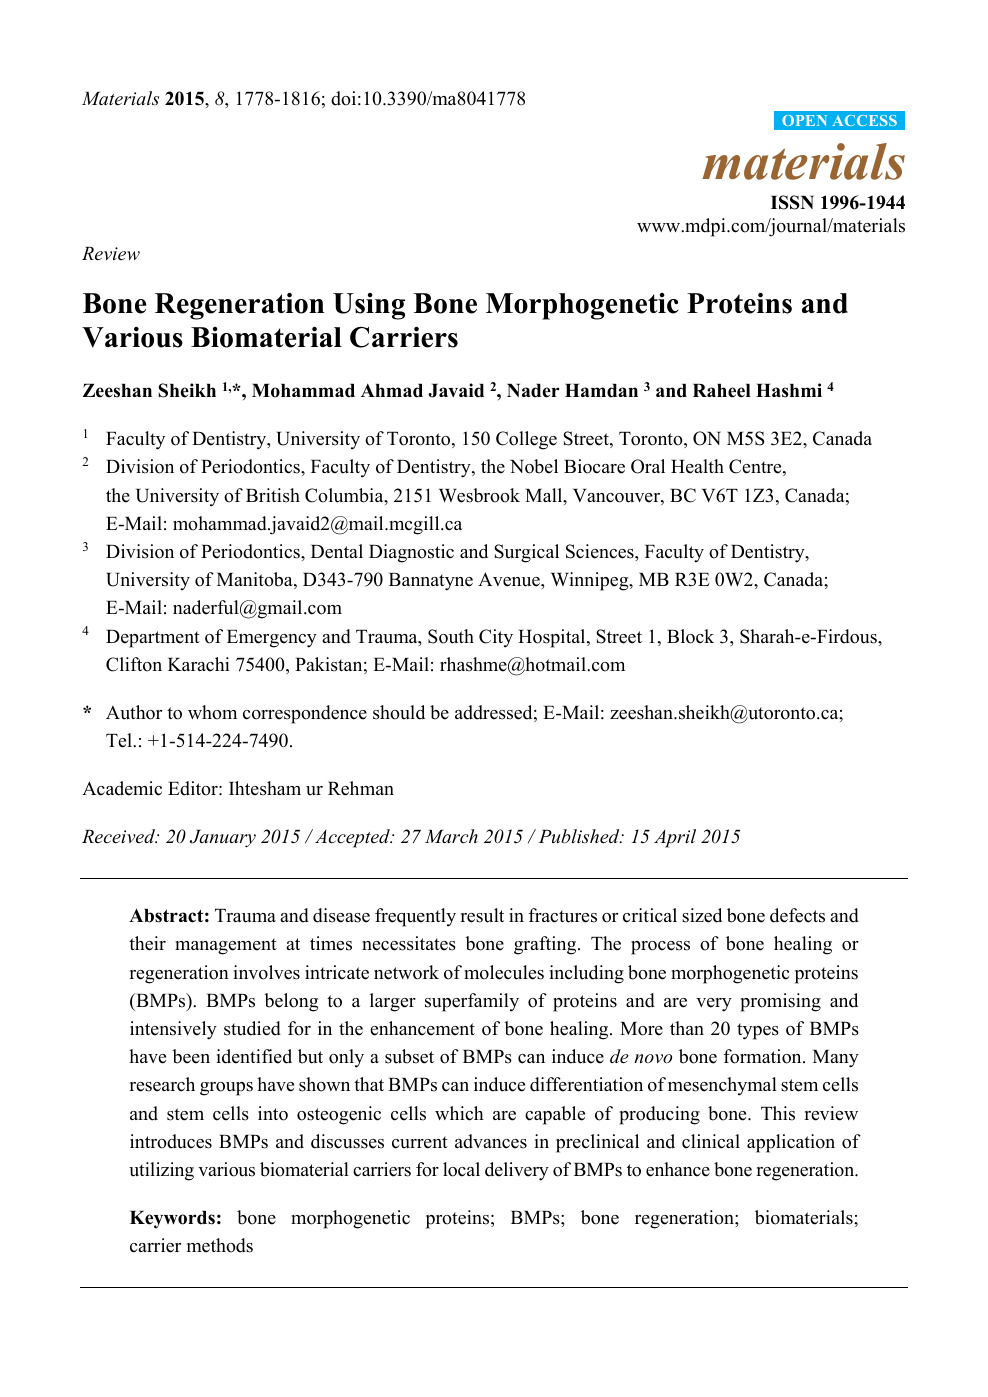 Bone Regeneration Using Bone Morphogenetic Proteins and Various 